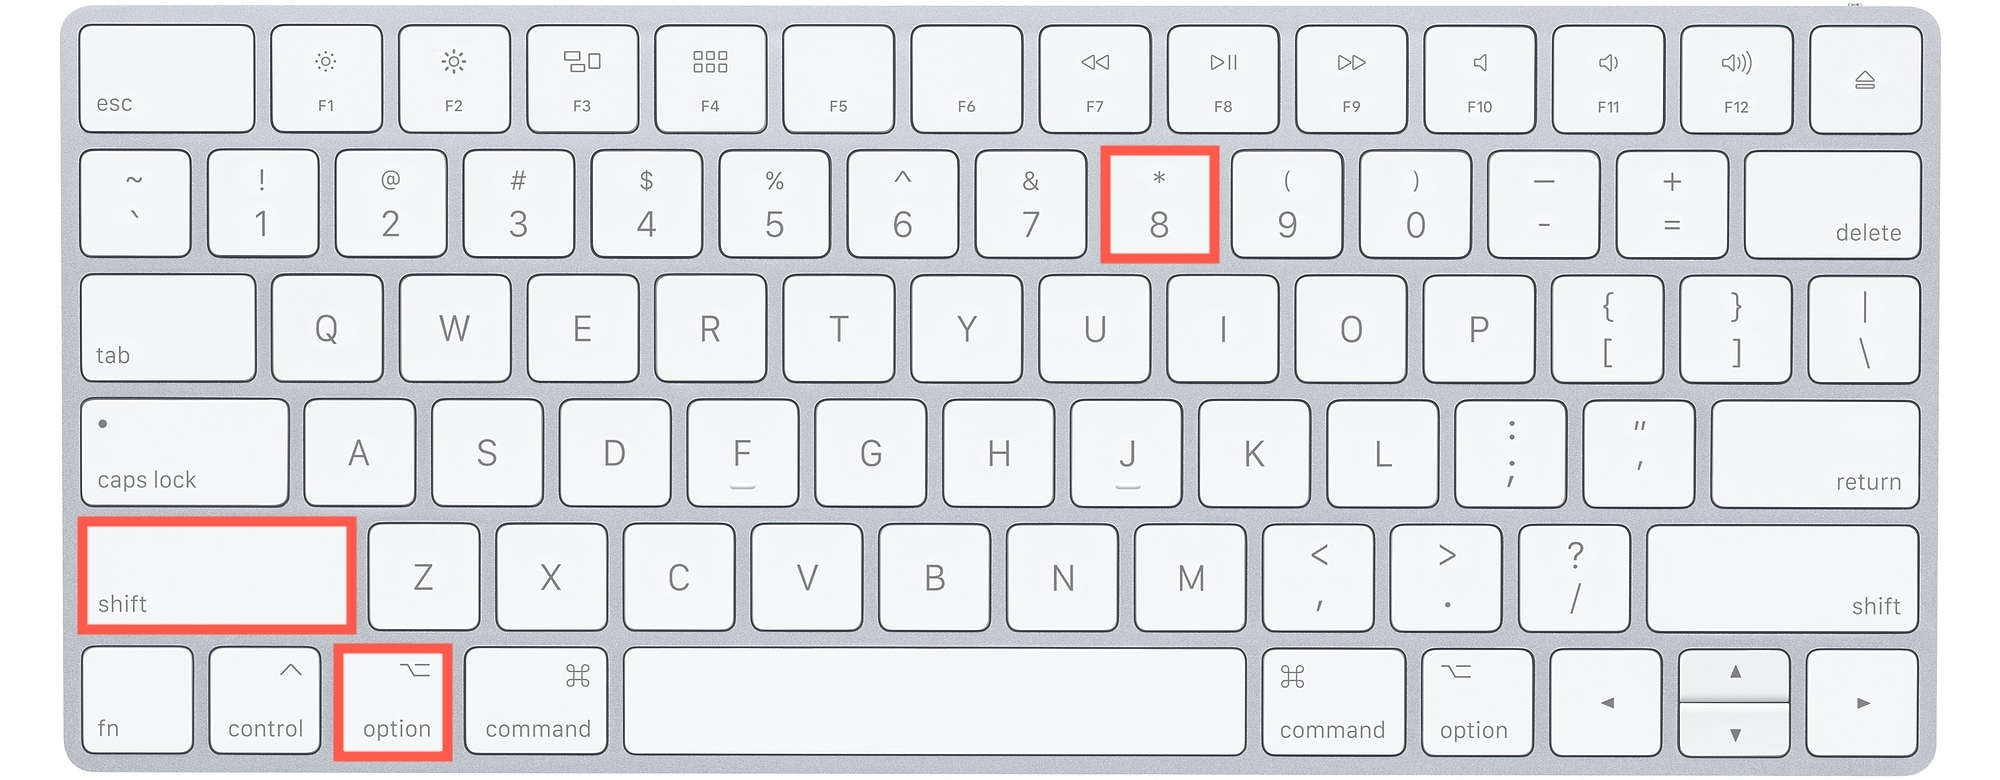 Degree Symbol Shortcut on Mac Keyboard